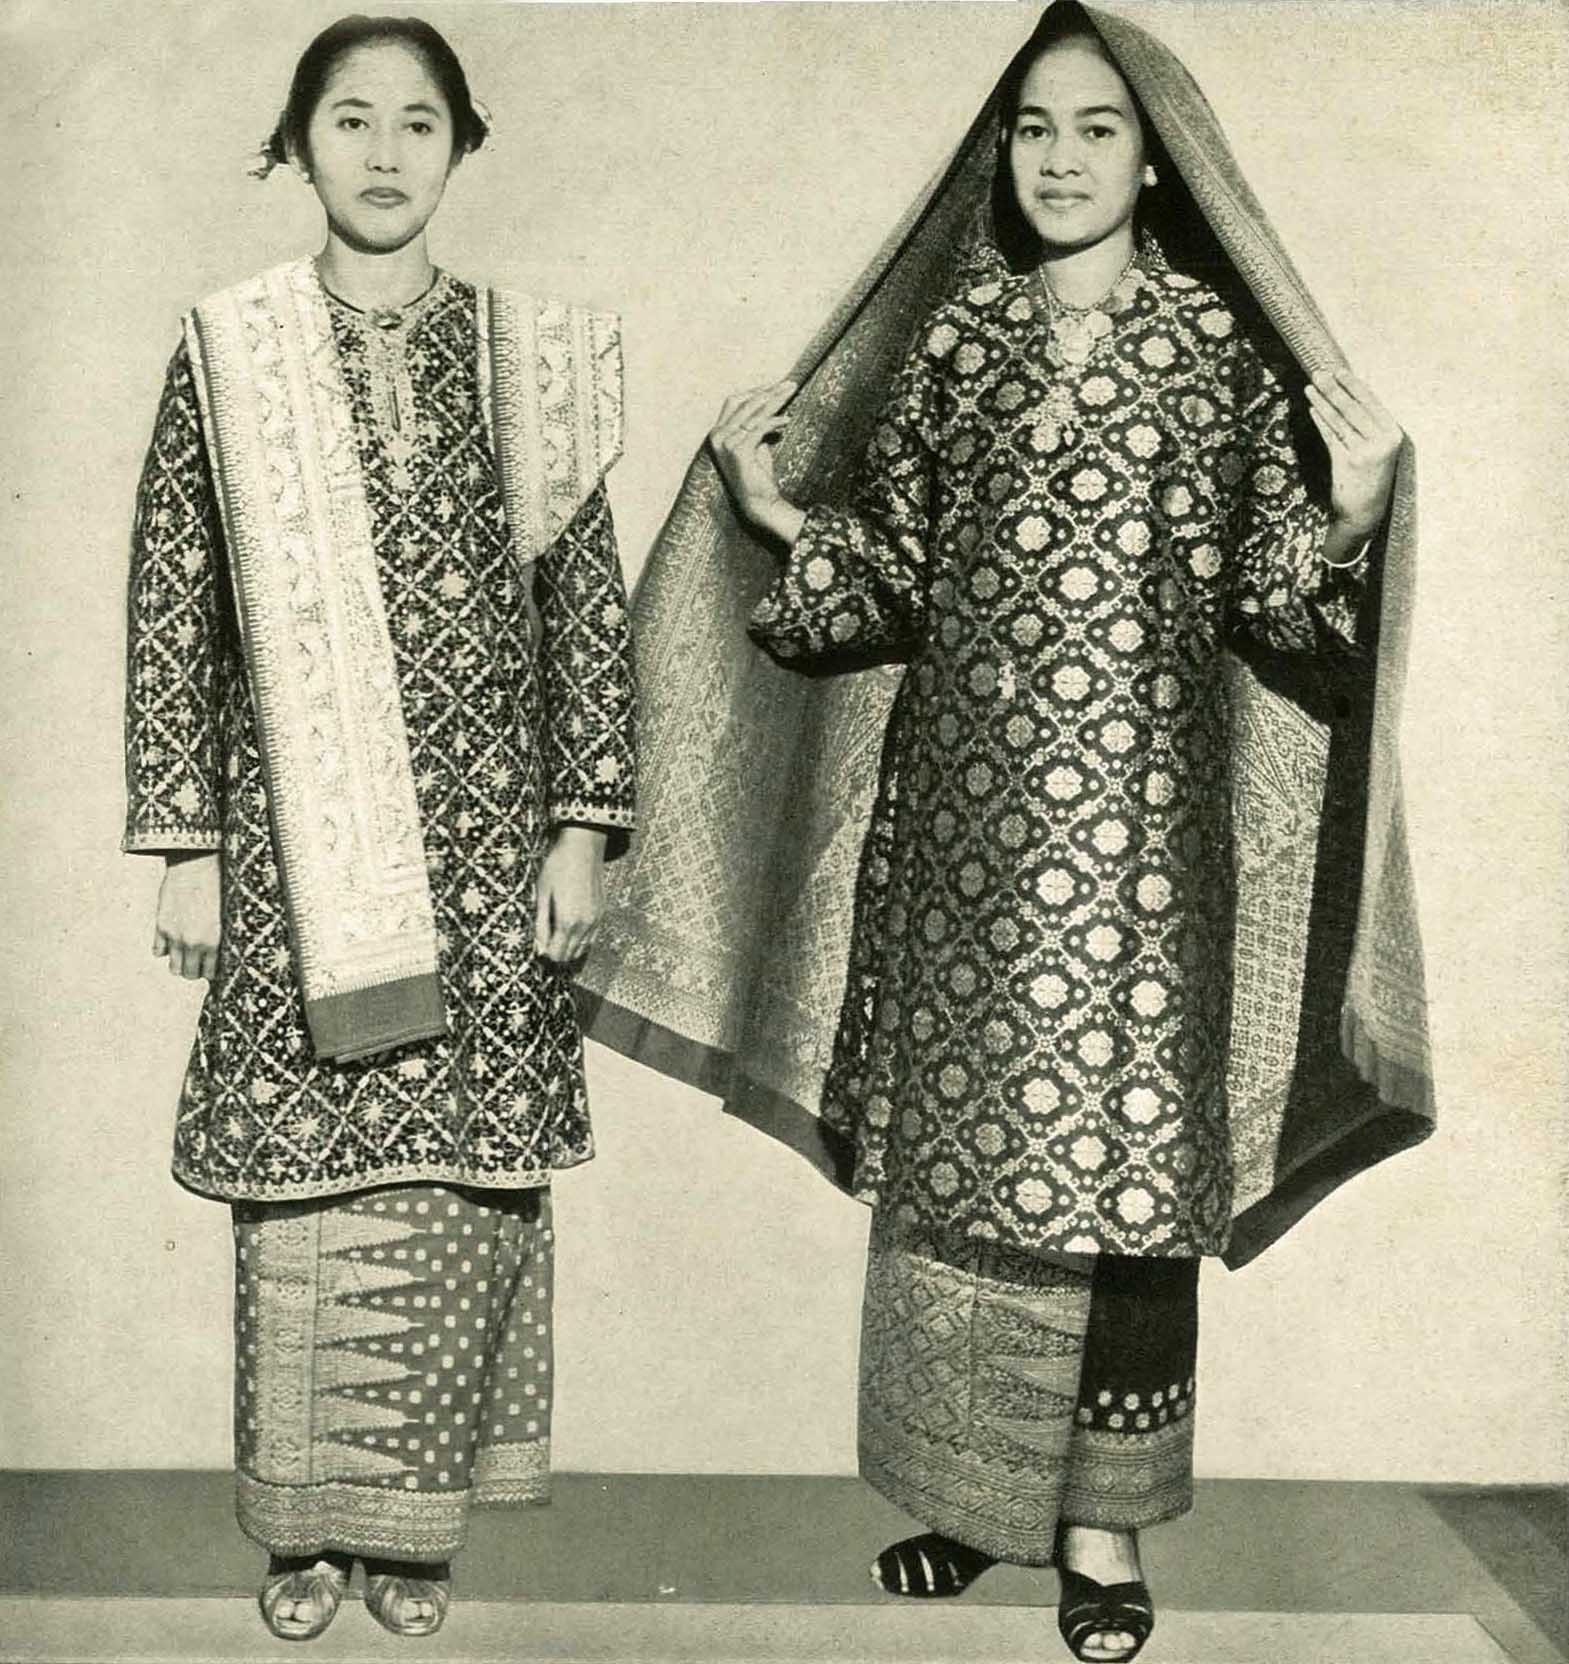 Baju Adat Melayu - Budayanesia